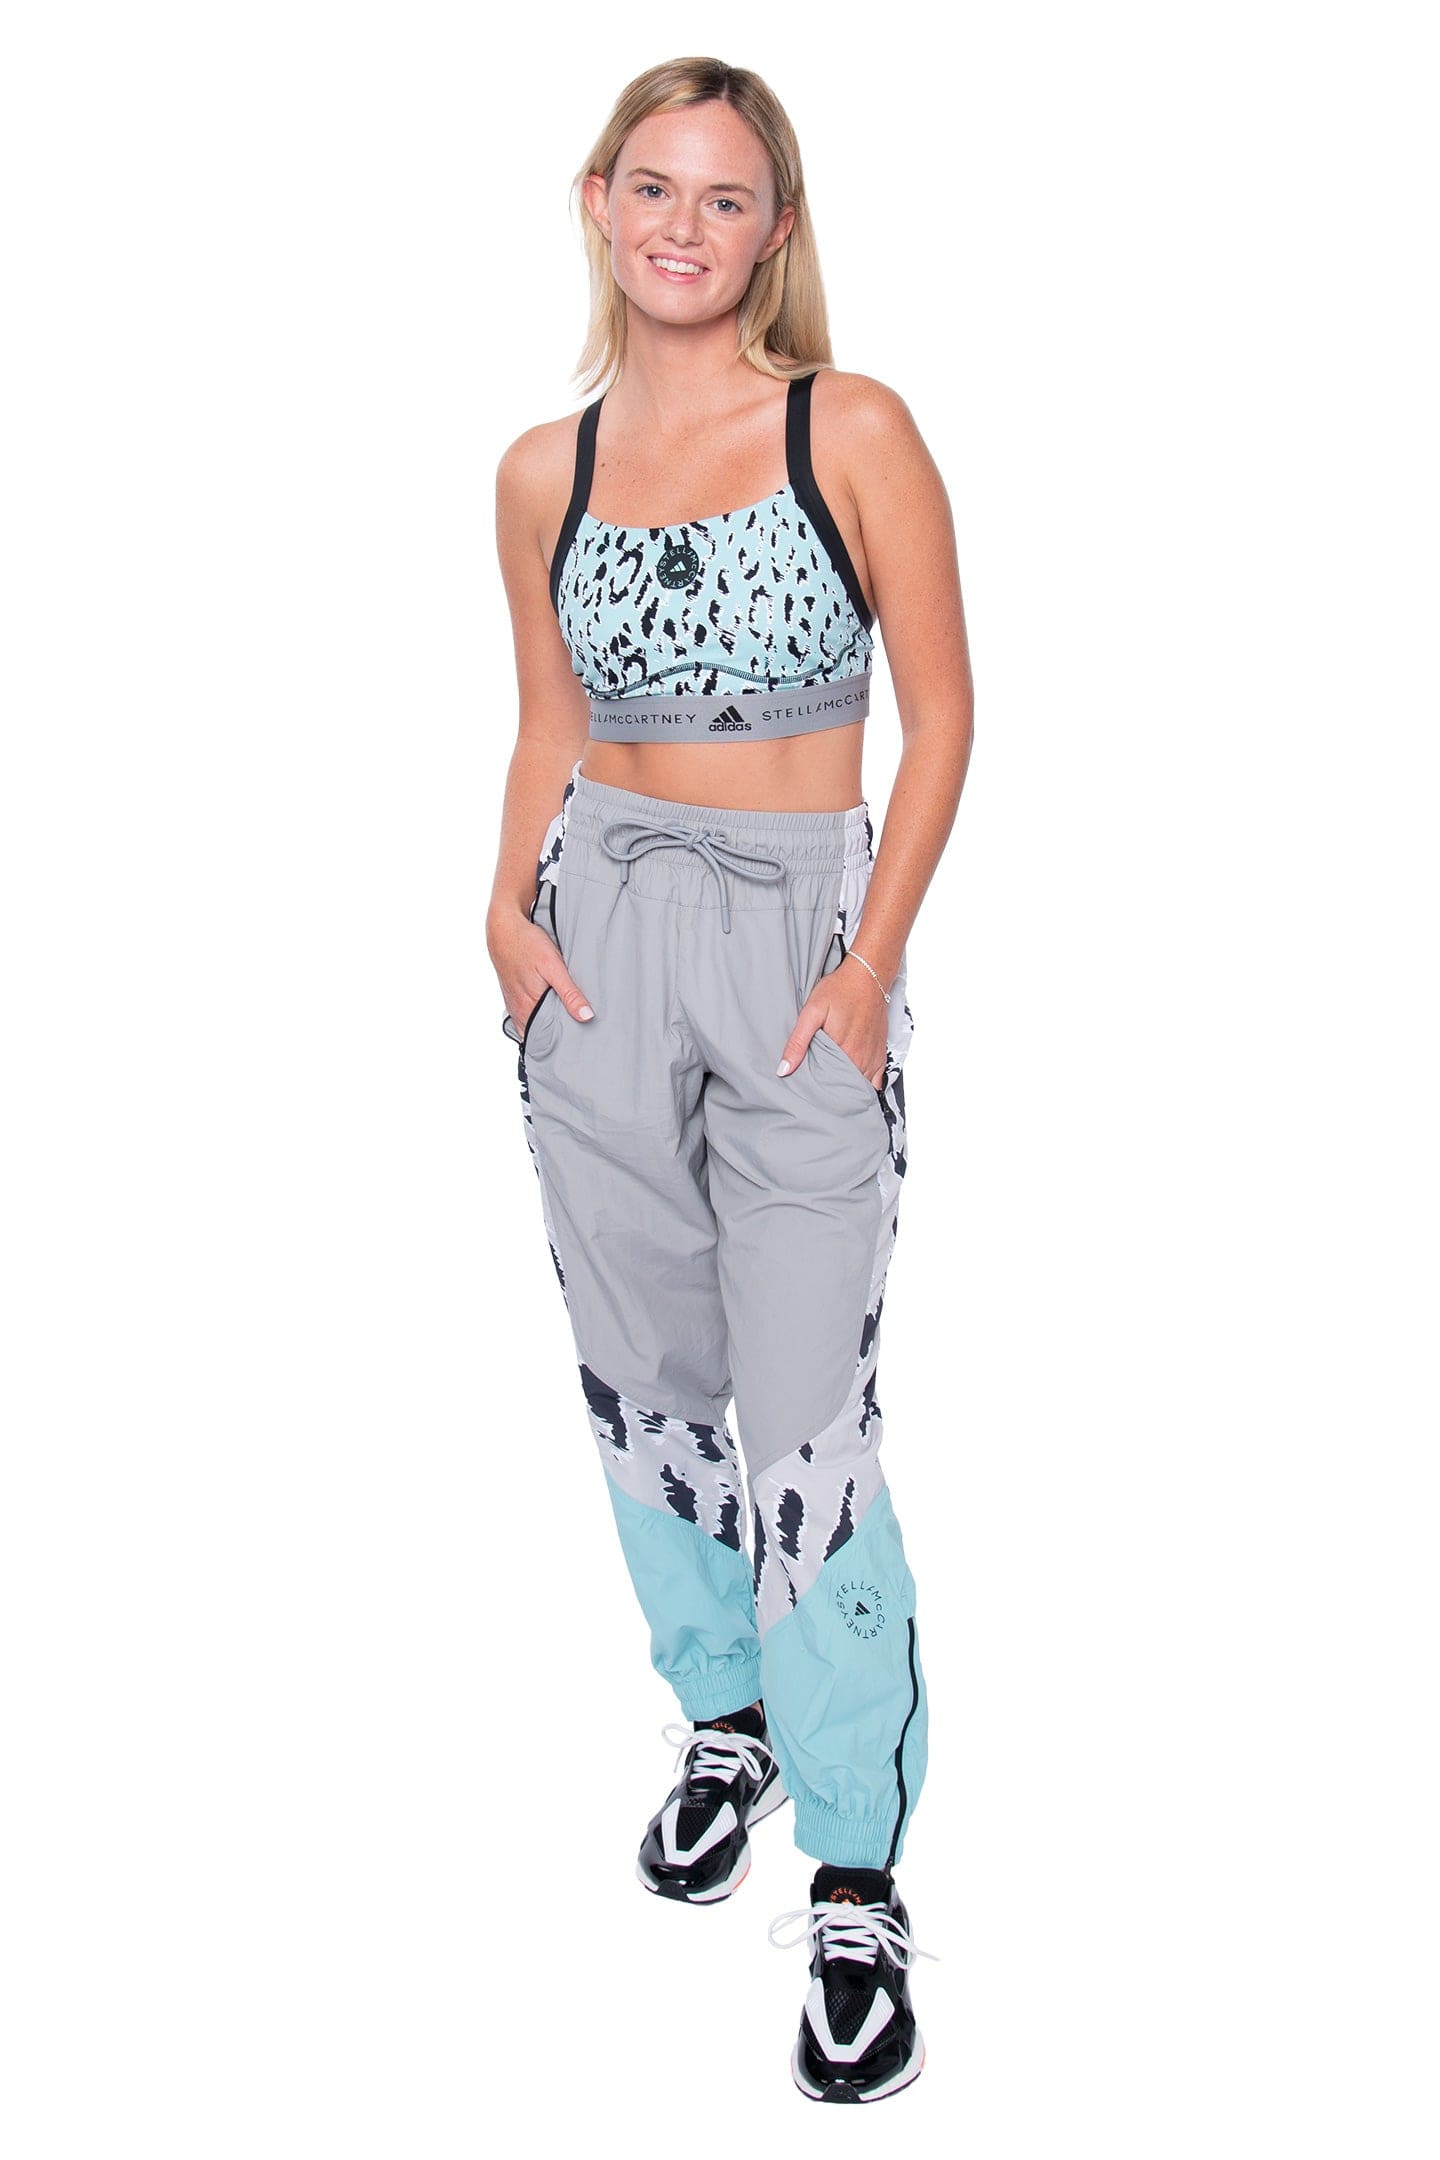 Adidas By Stella Mccartney Sports Bra Girl Boob Tube Tank Top Crop